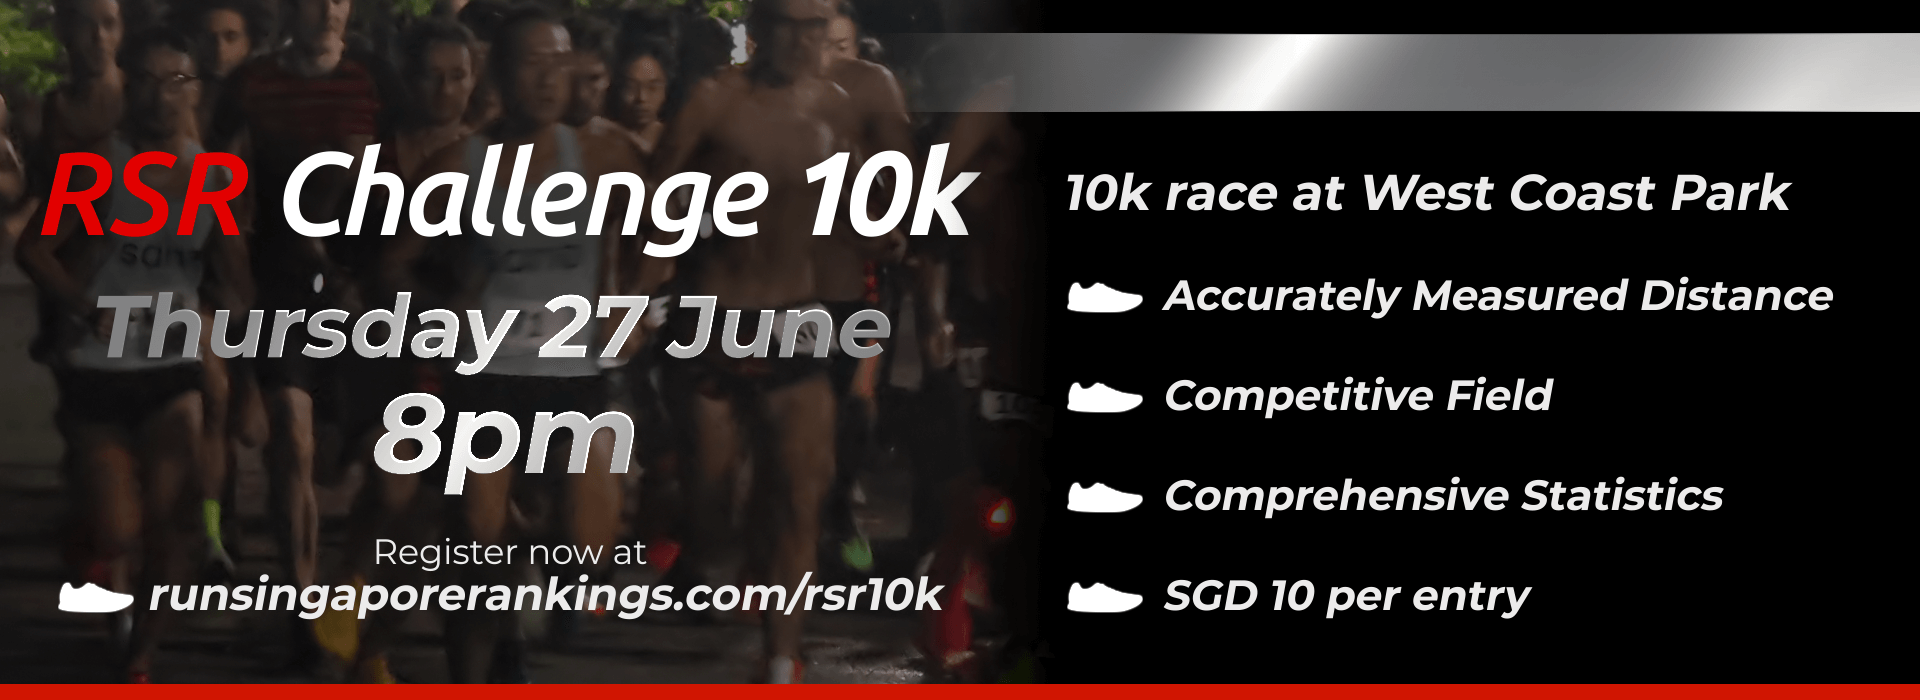 RSR Challenge 10k